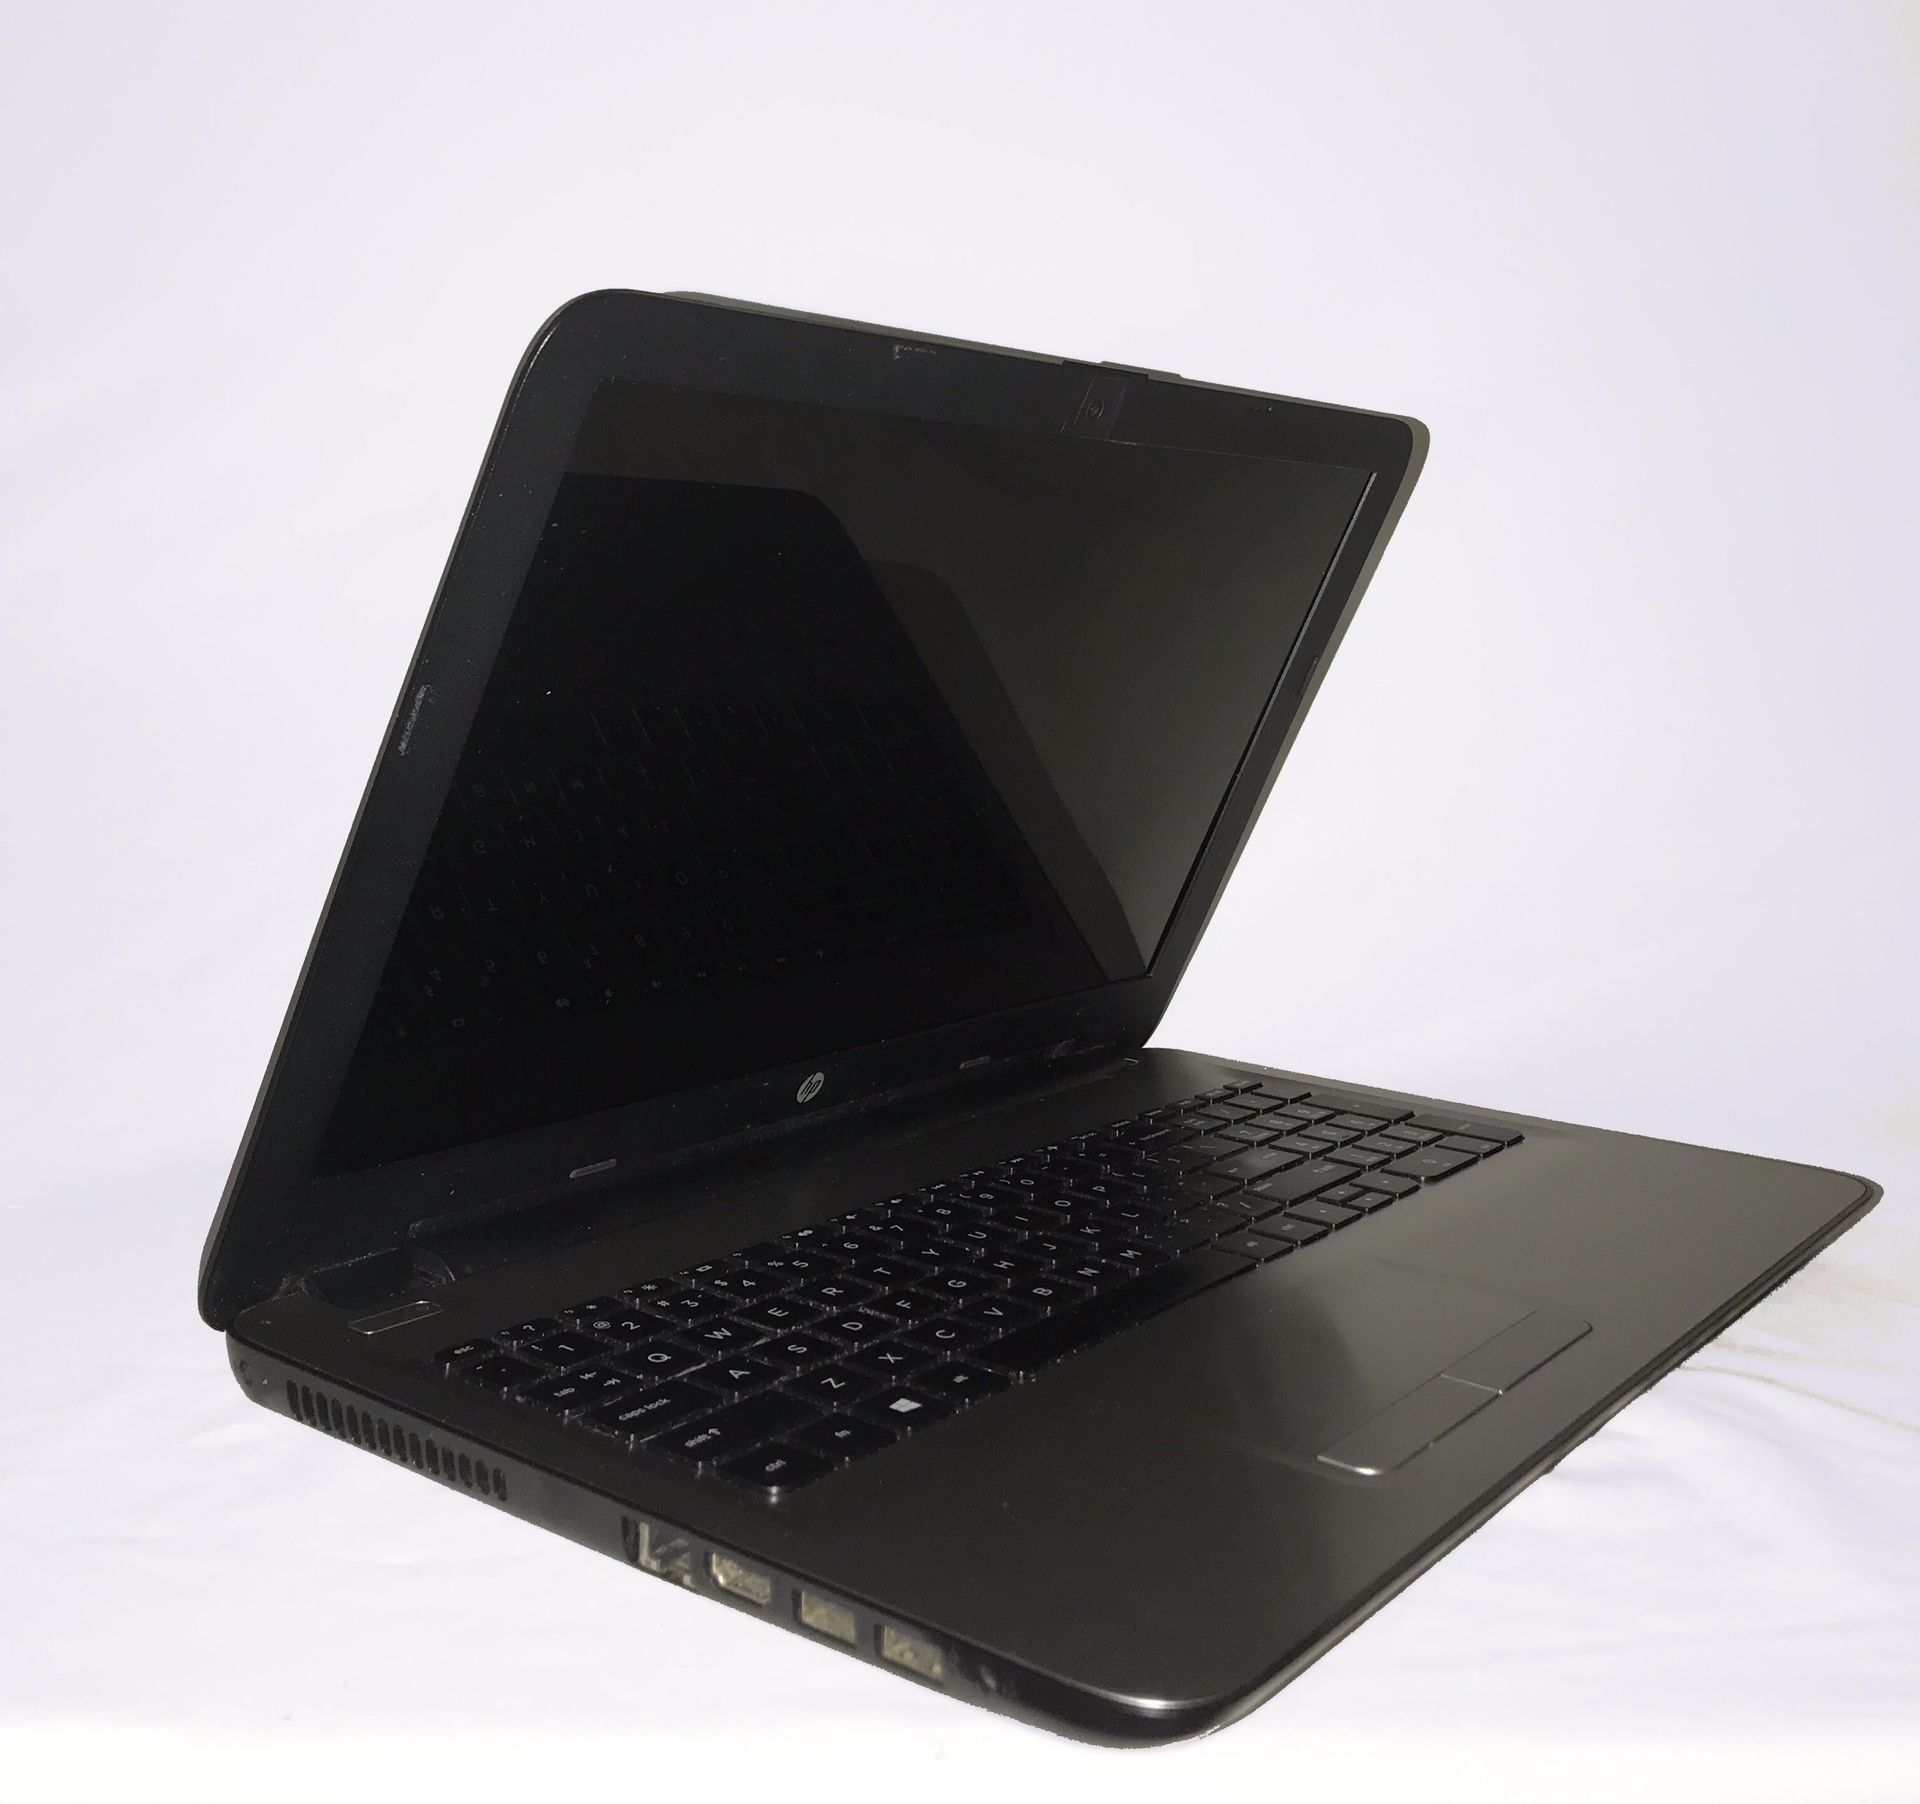 HP NoteBook 15” Laptop 4gb 1.80 GHz